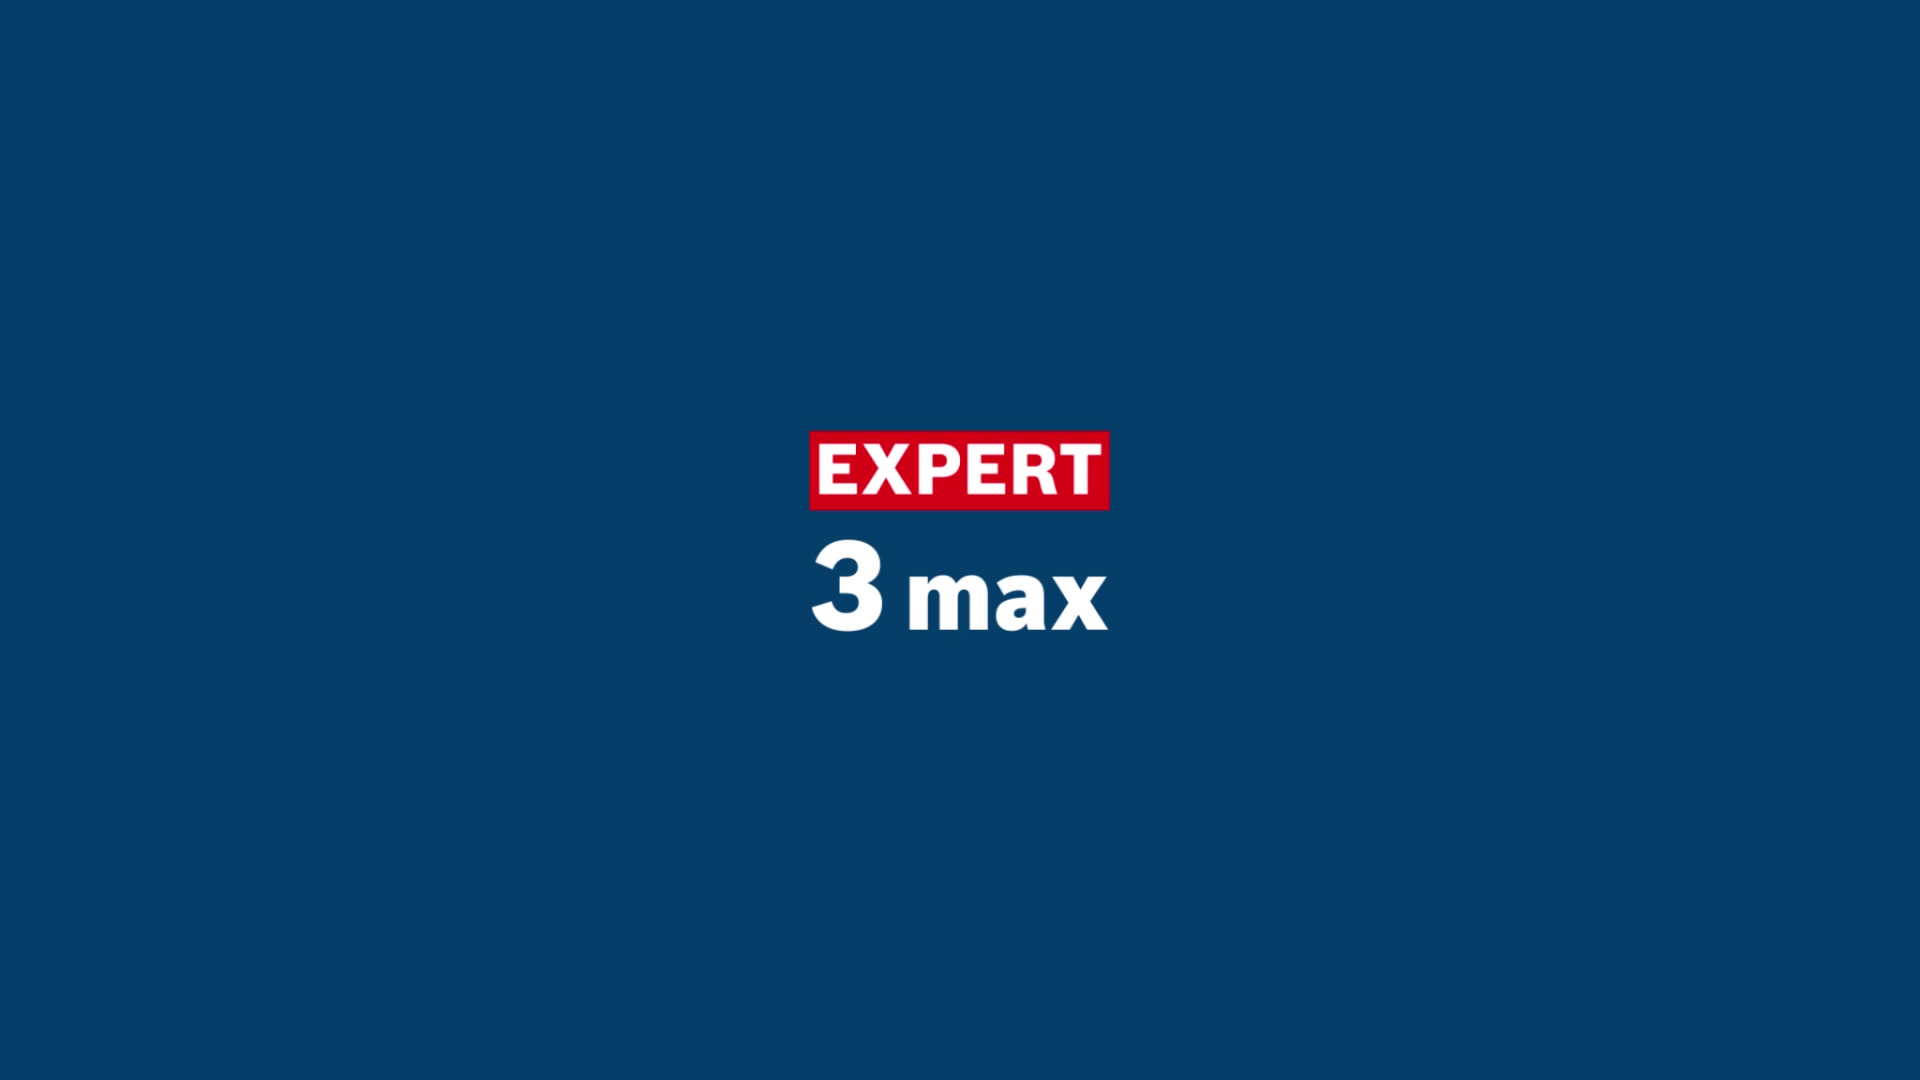 EXPERT 3 max